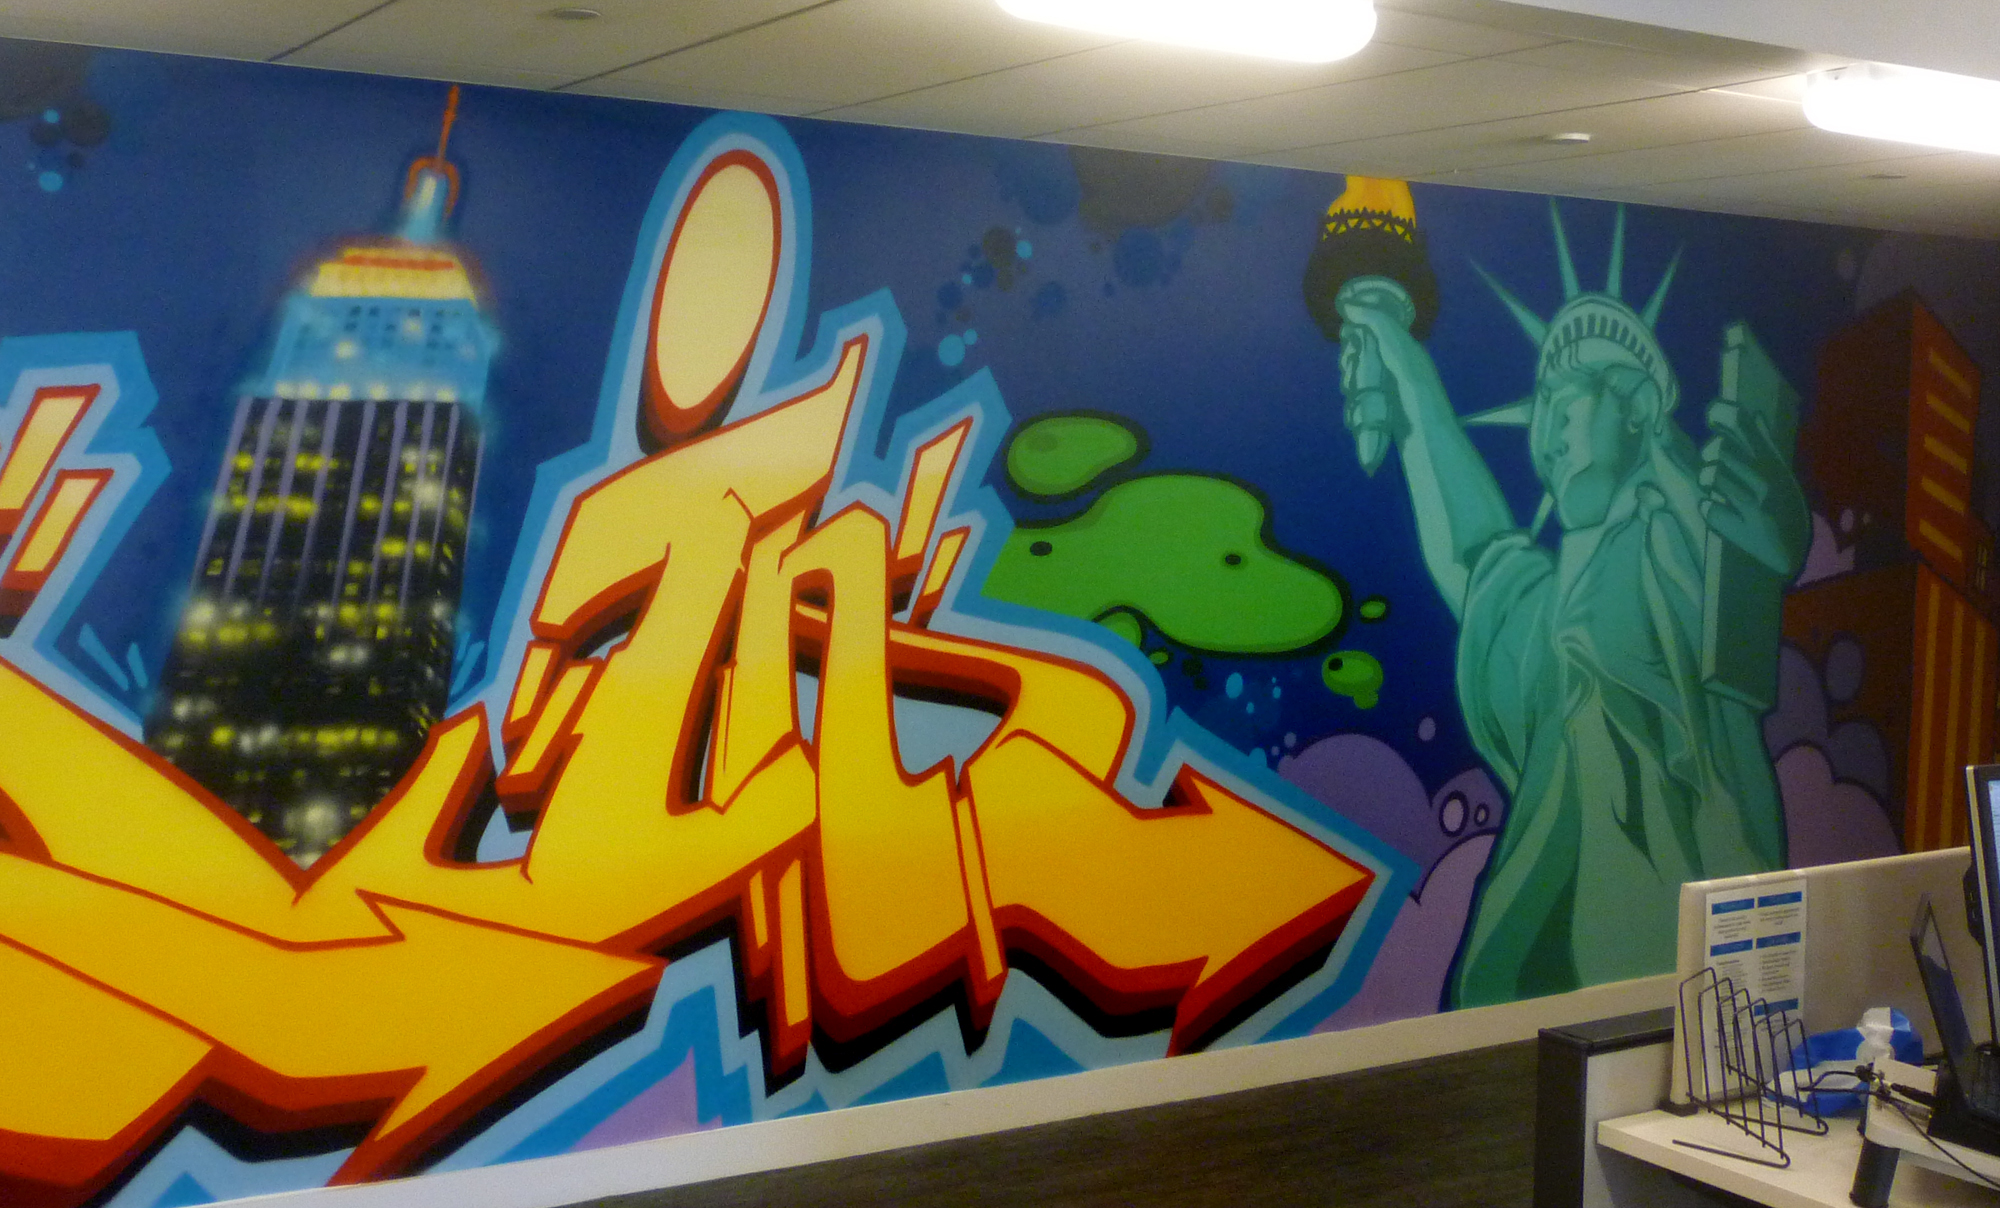 LinkedIn mural, Masterpiece NYC, masterpiece murals, hand painted mural, office mural, custom mural, mural, graffiti mural, graffiti artist for hire, graffiti mural, graffiti artist